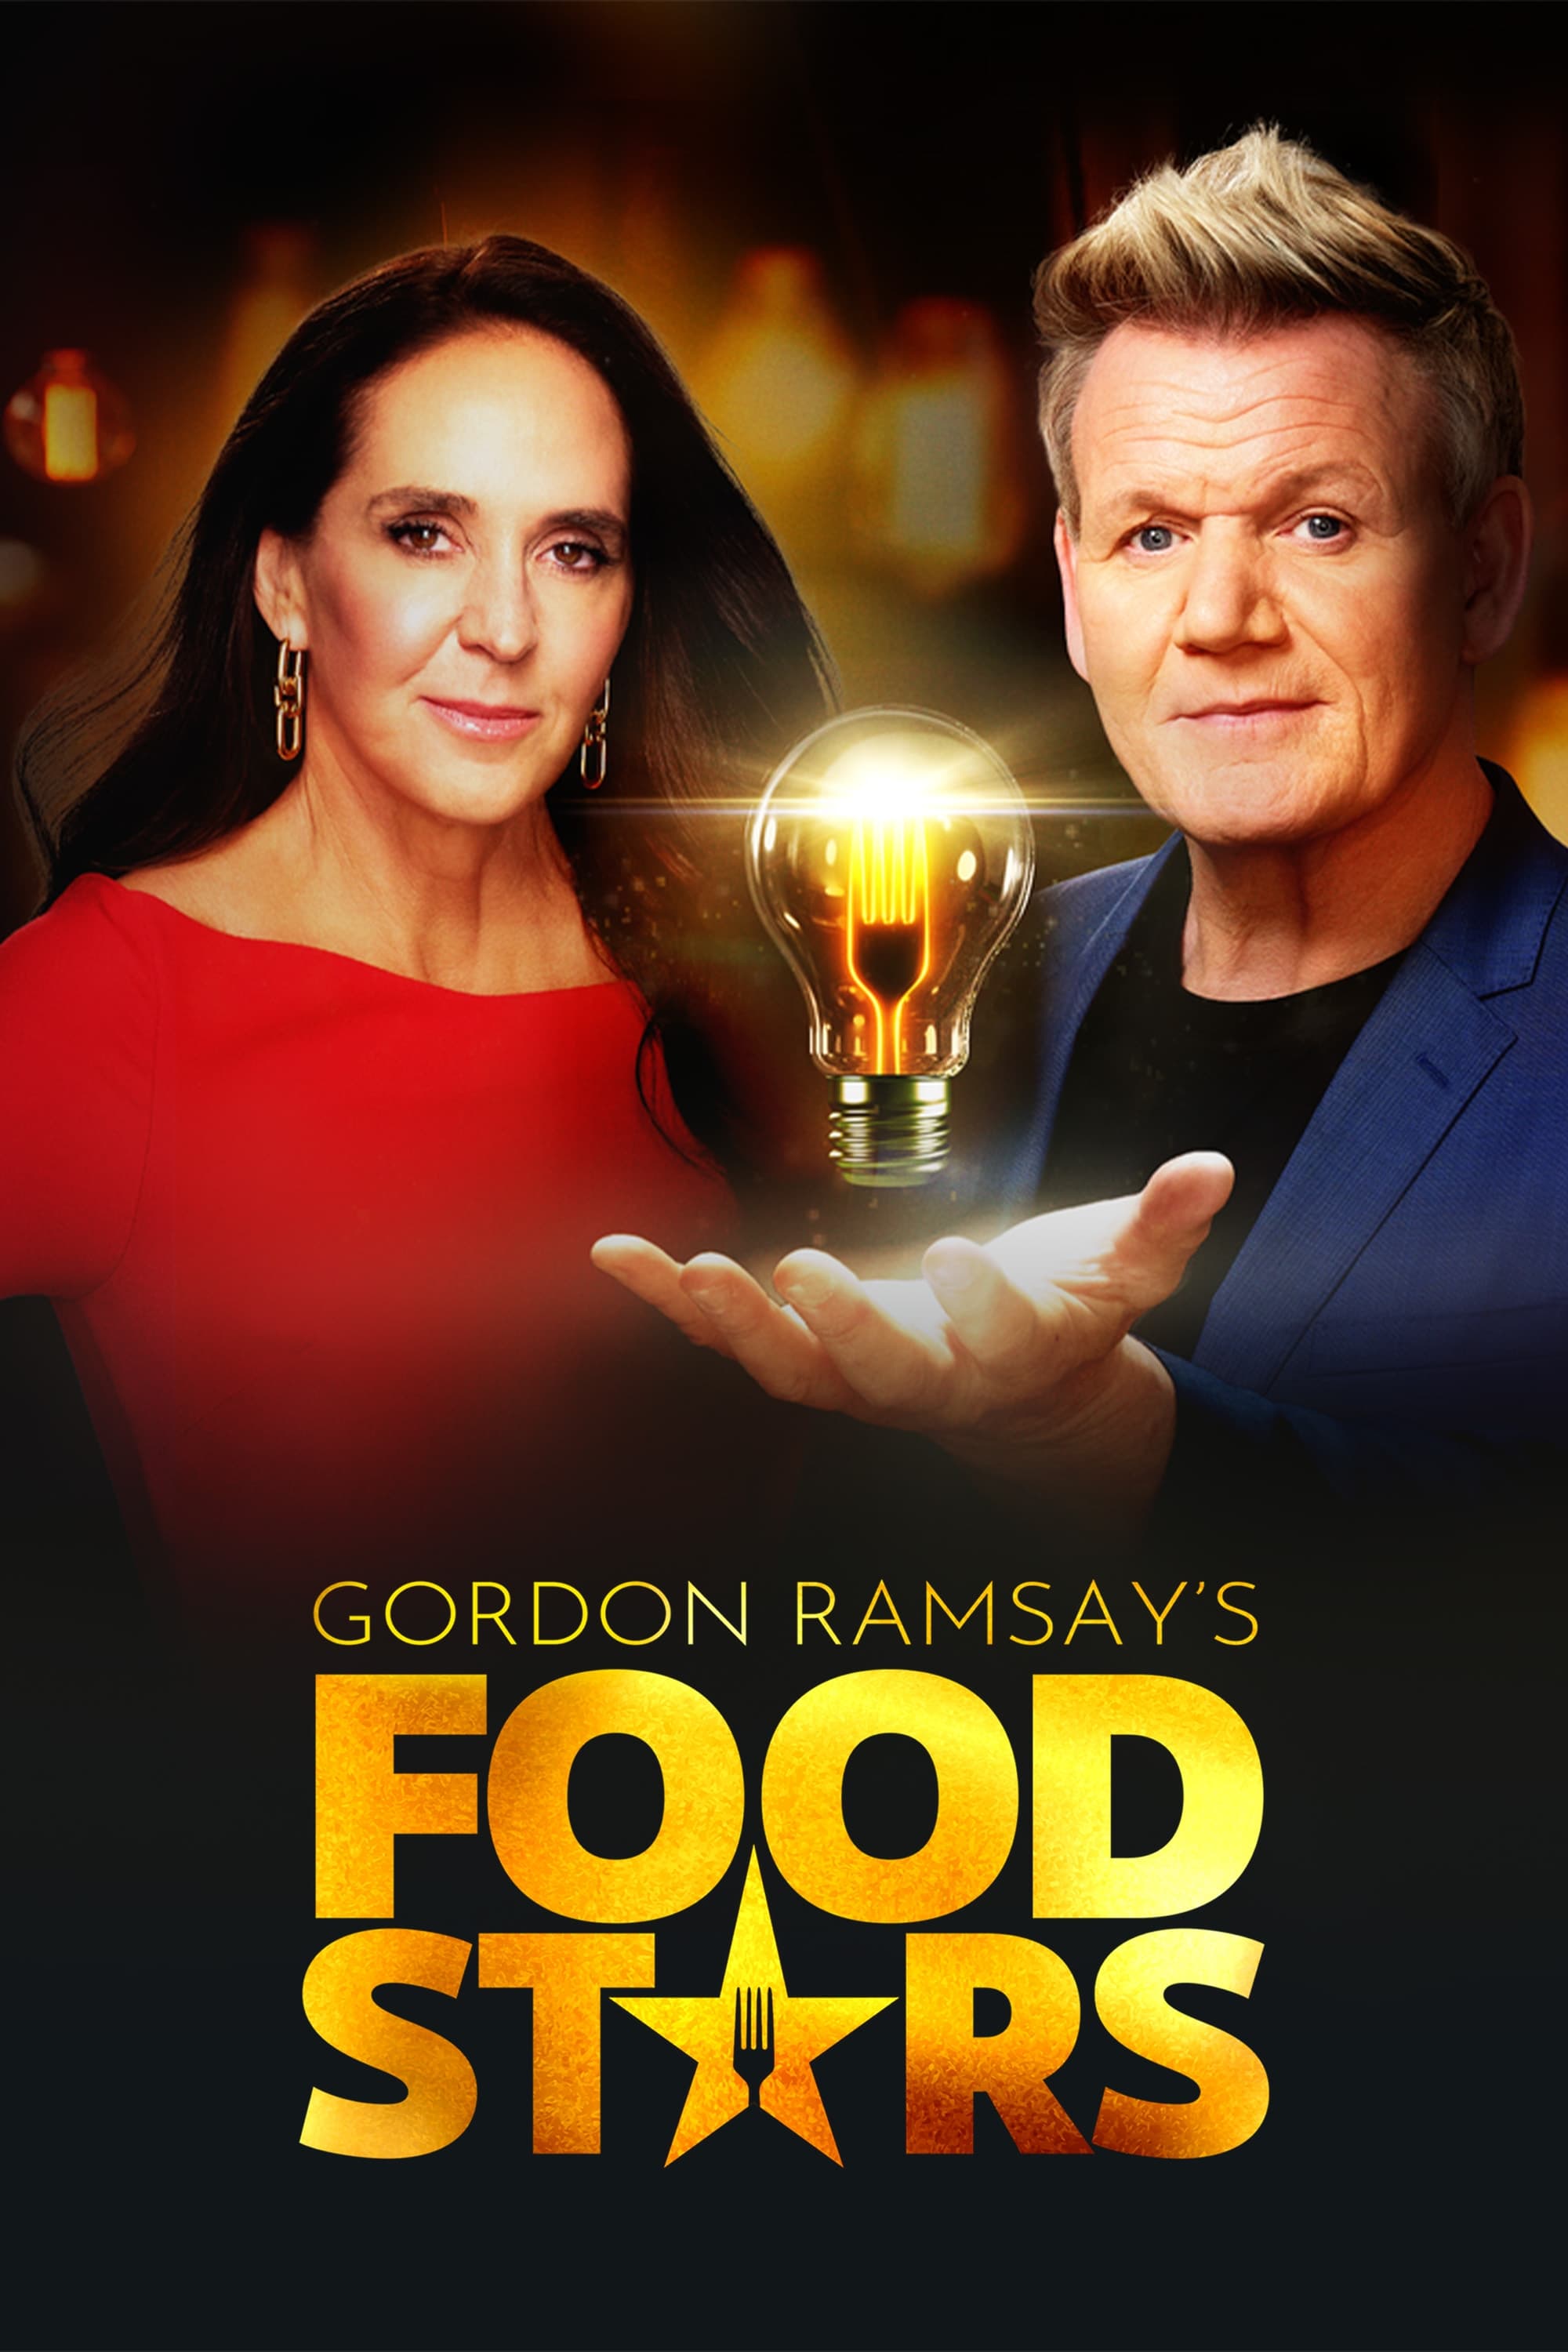 Gordon Ramsay's Food Stars (AU)